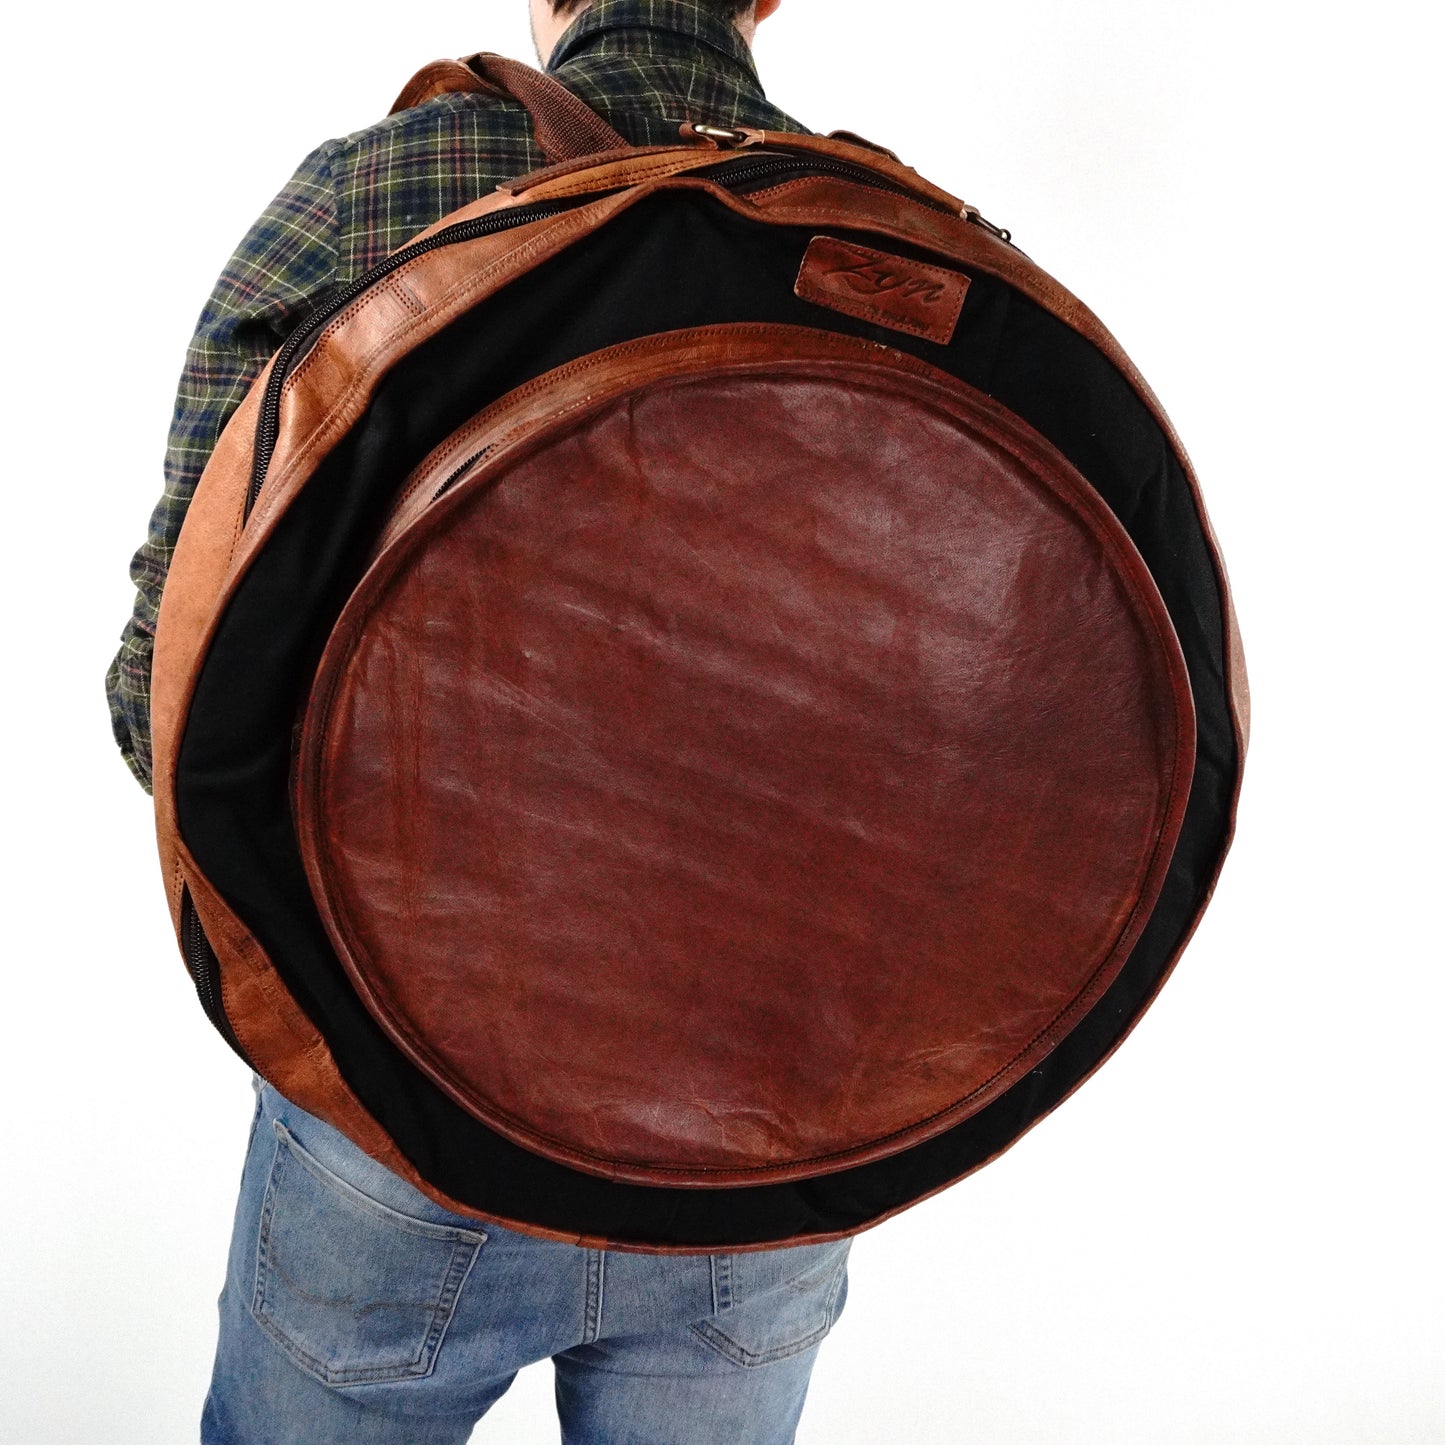 ZYN Luxury Cymbal Bag 23" Leather Canvas Cymbal Backpack/ Case